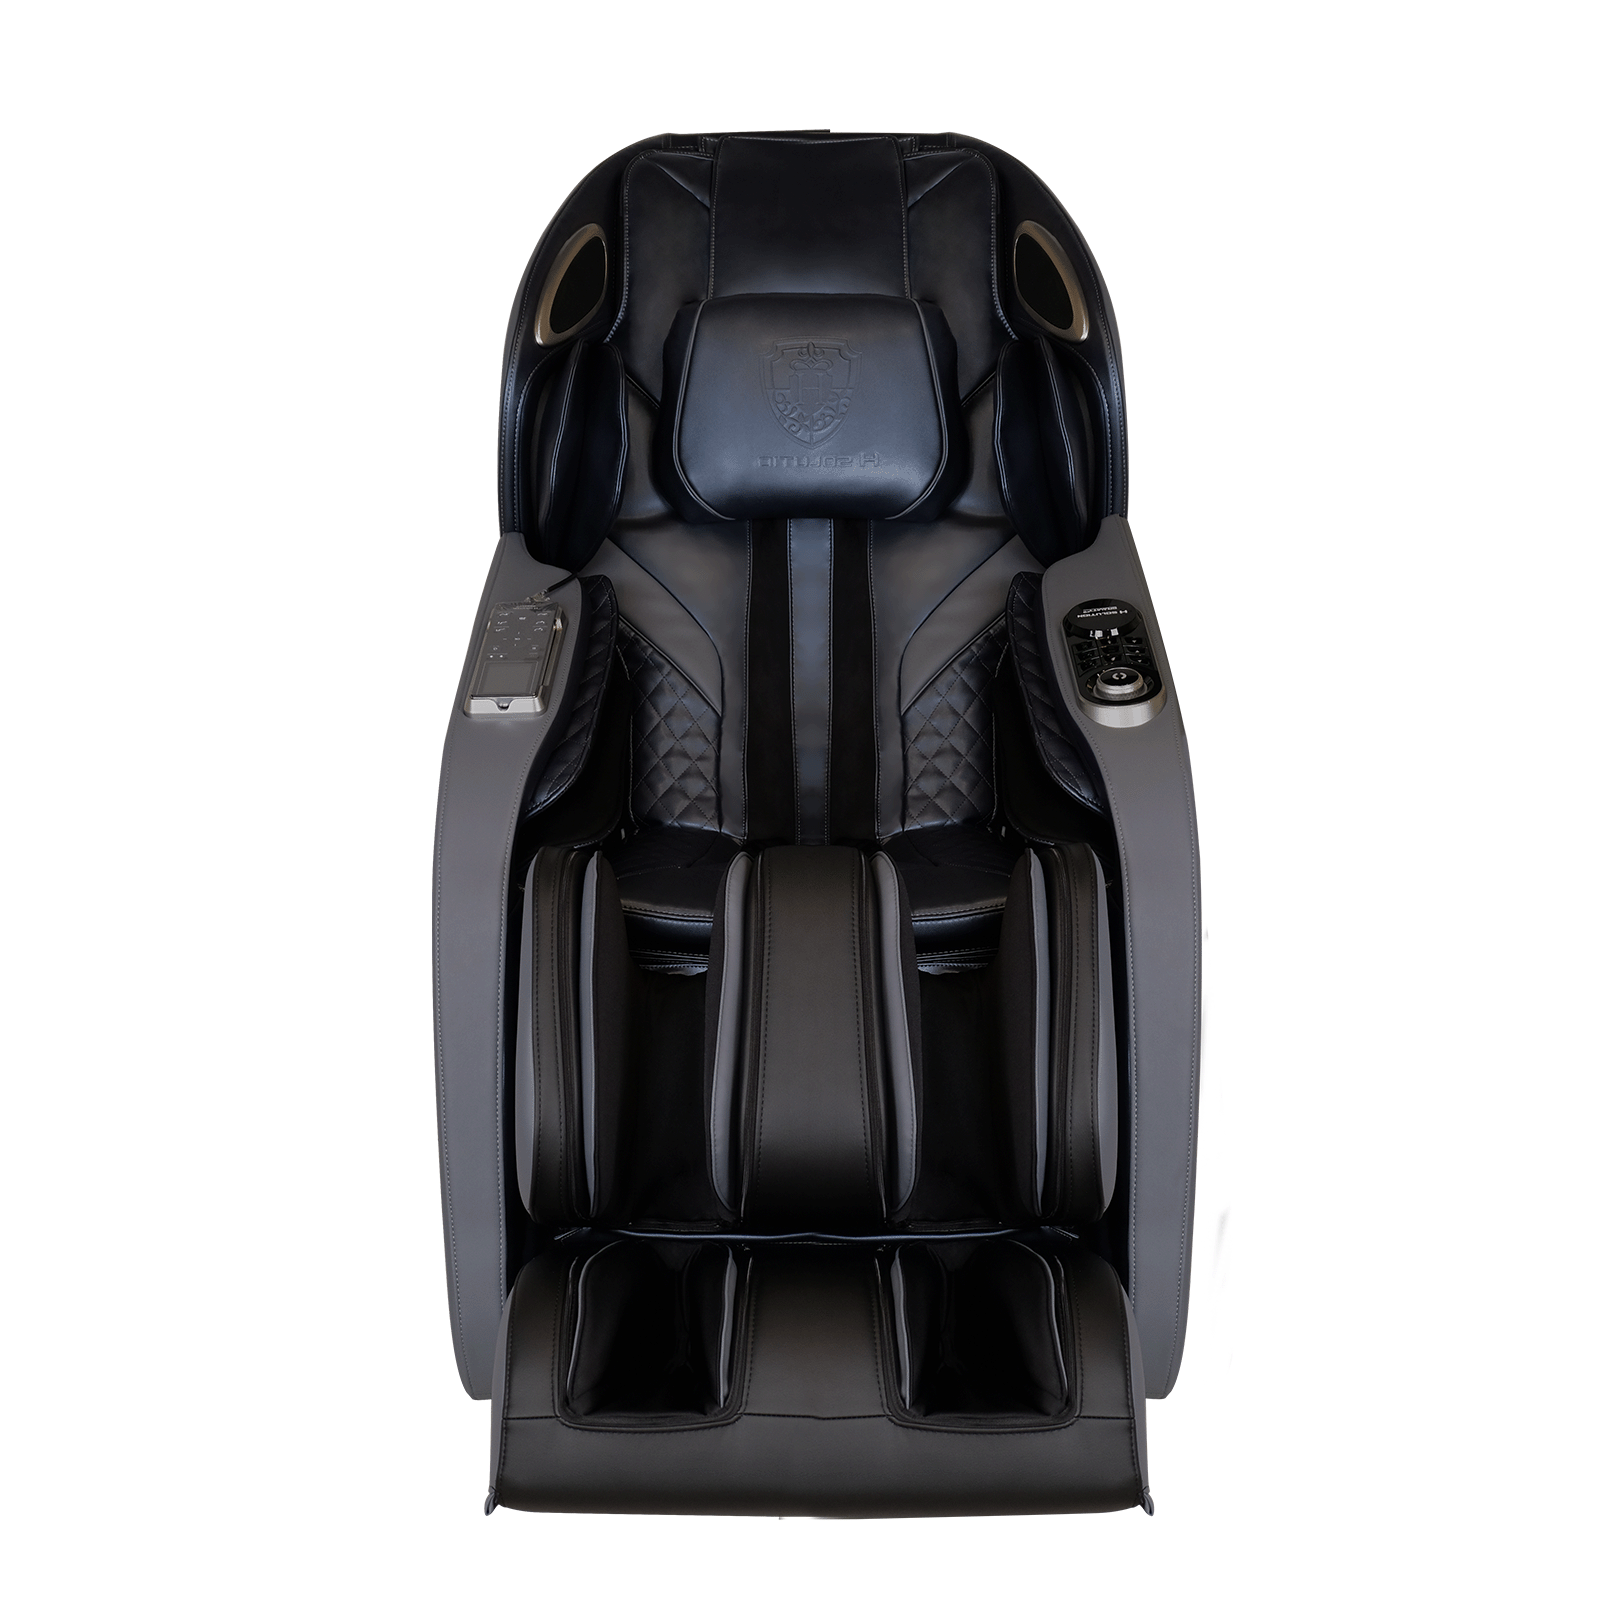 H Solution Gravity TURBO Massage Chair (Gray)